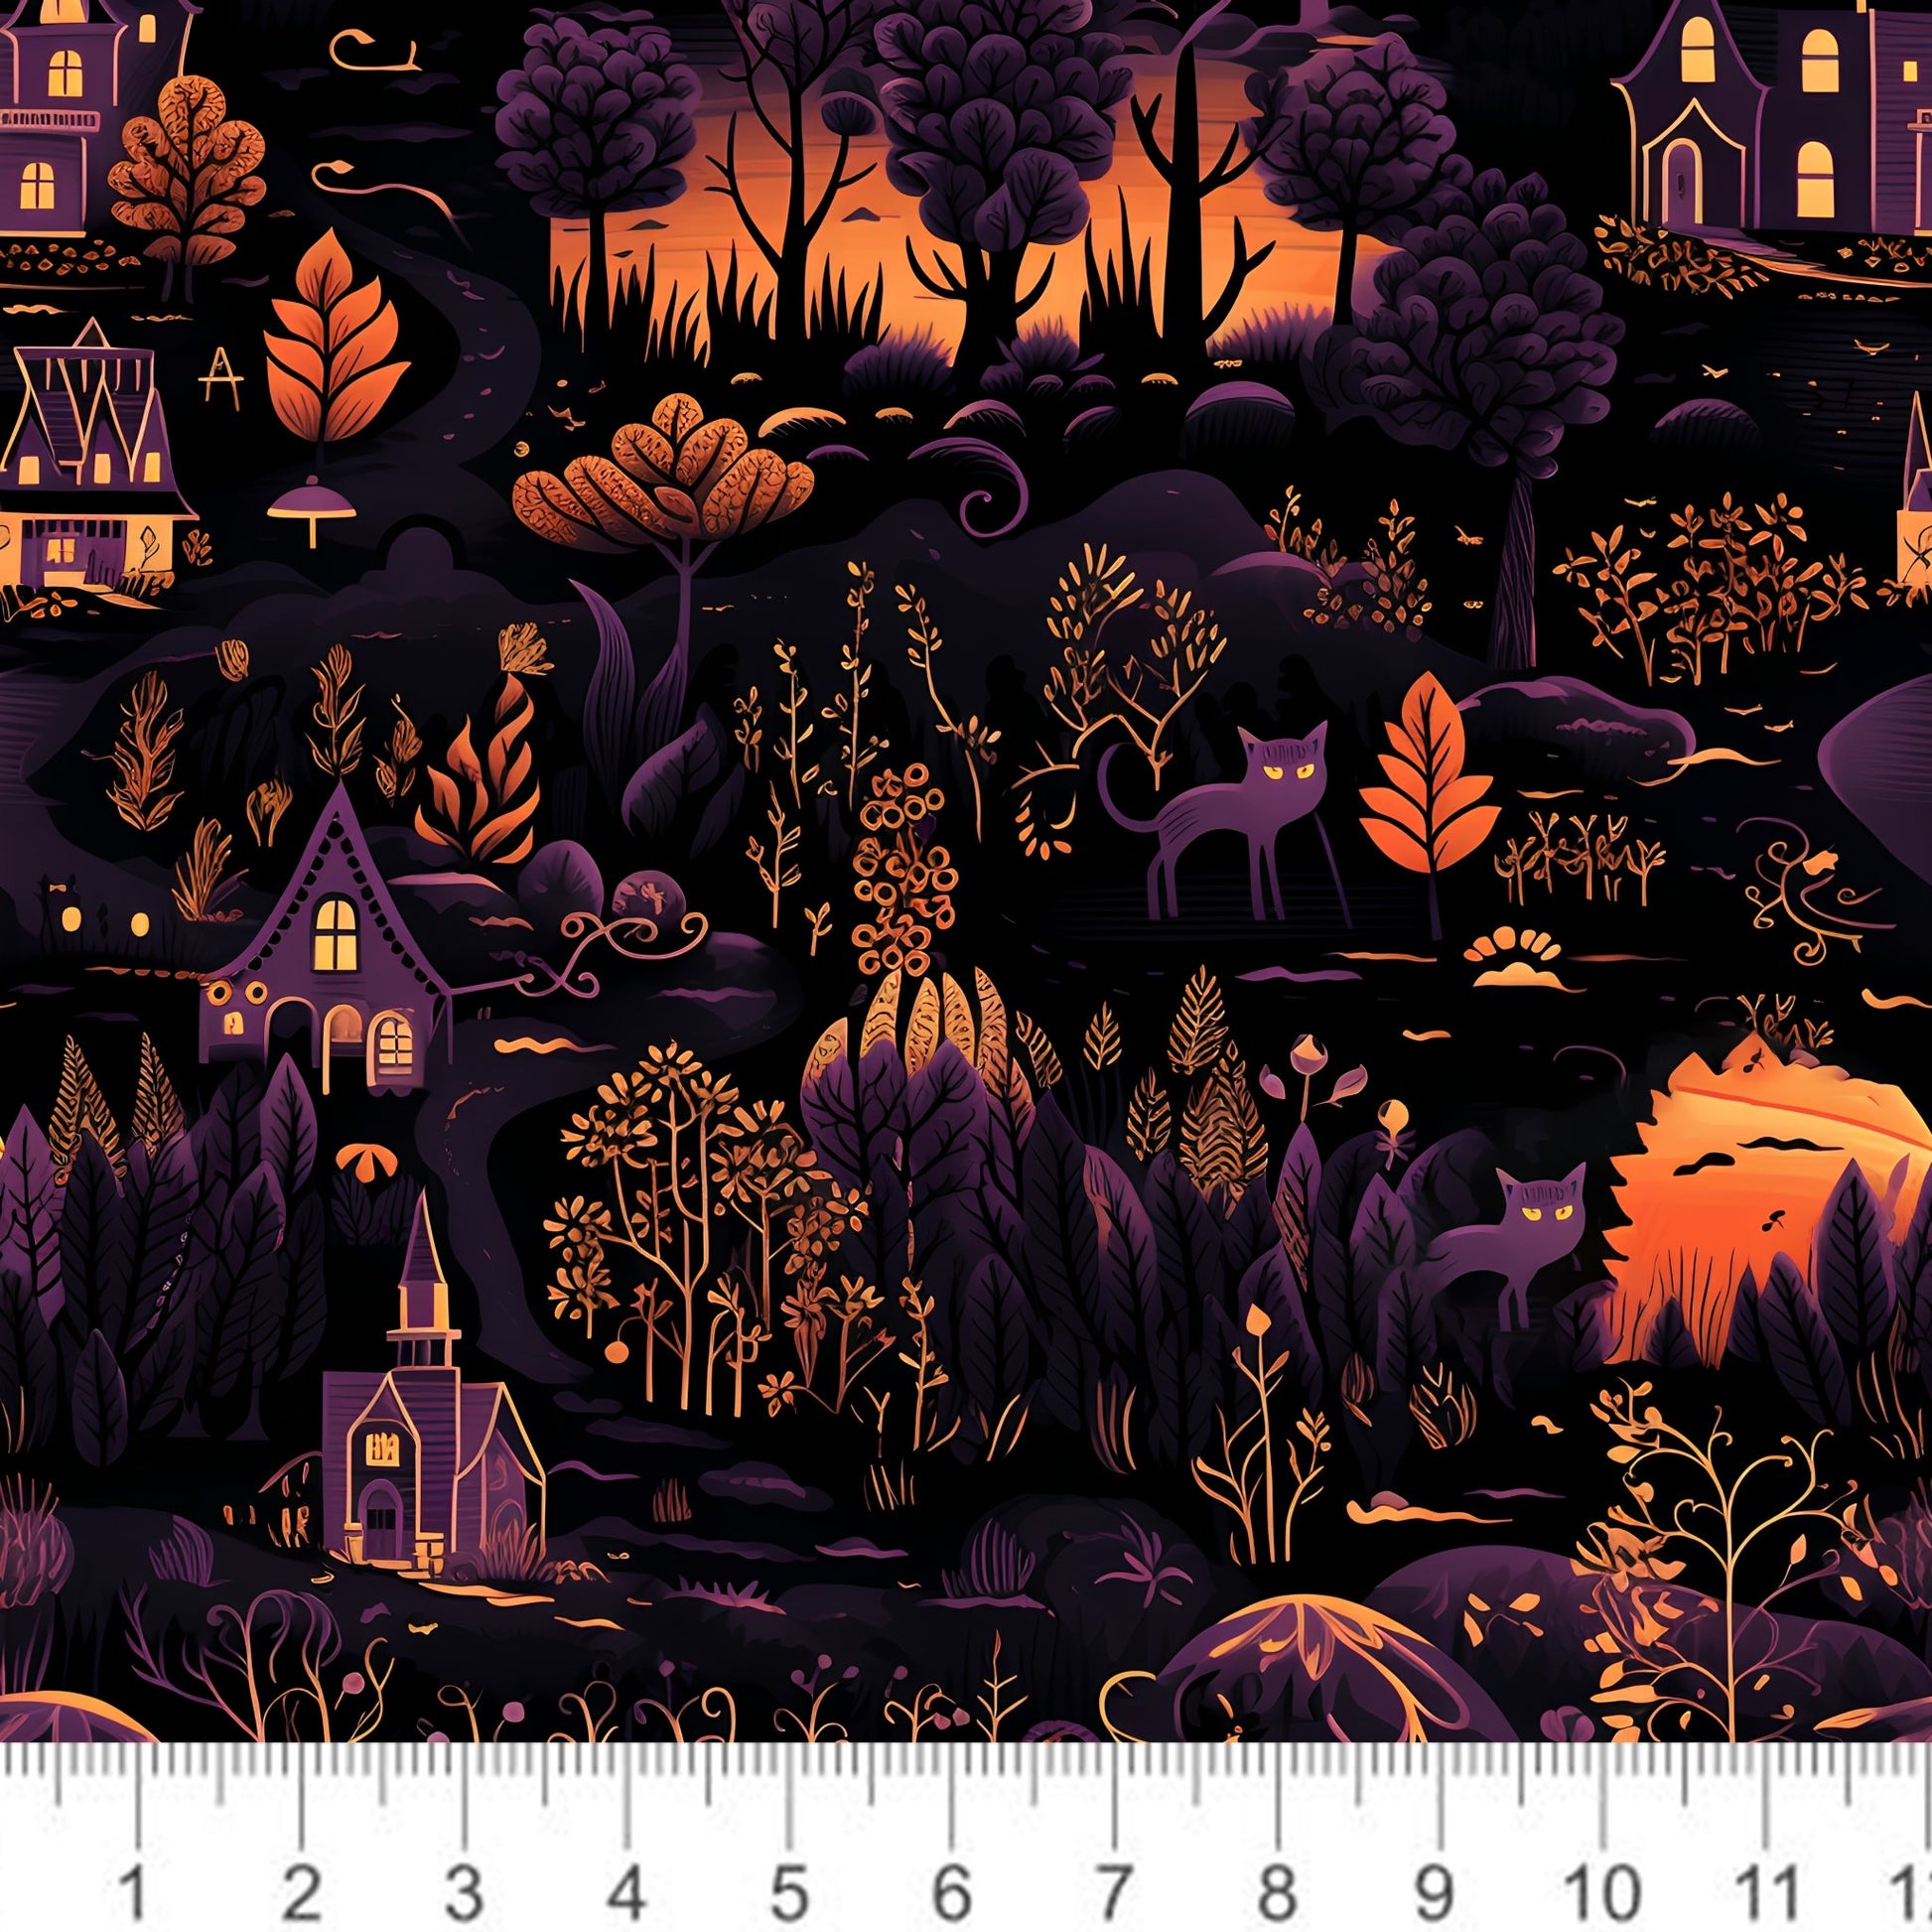 Autumn Village with Cats - Purple - Black - Orange - Little Rhody Sewing Co.